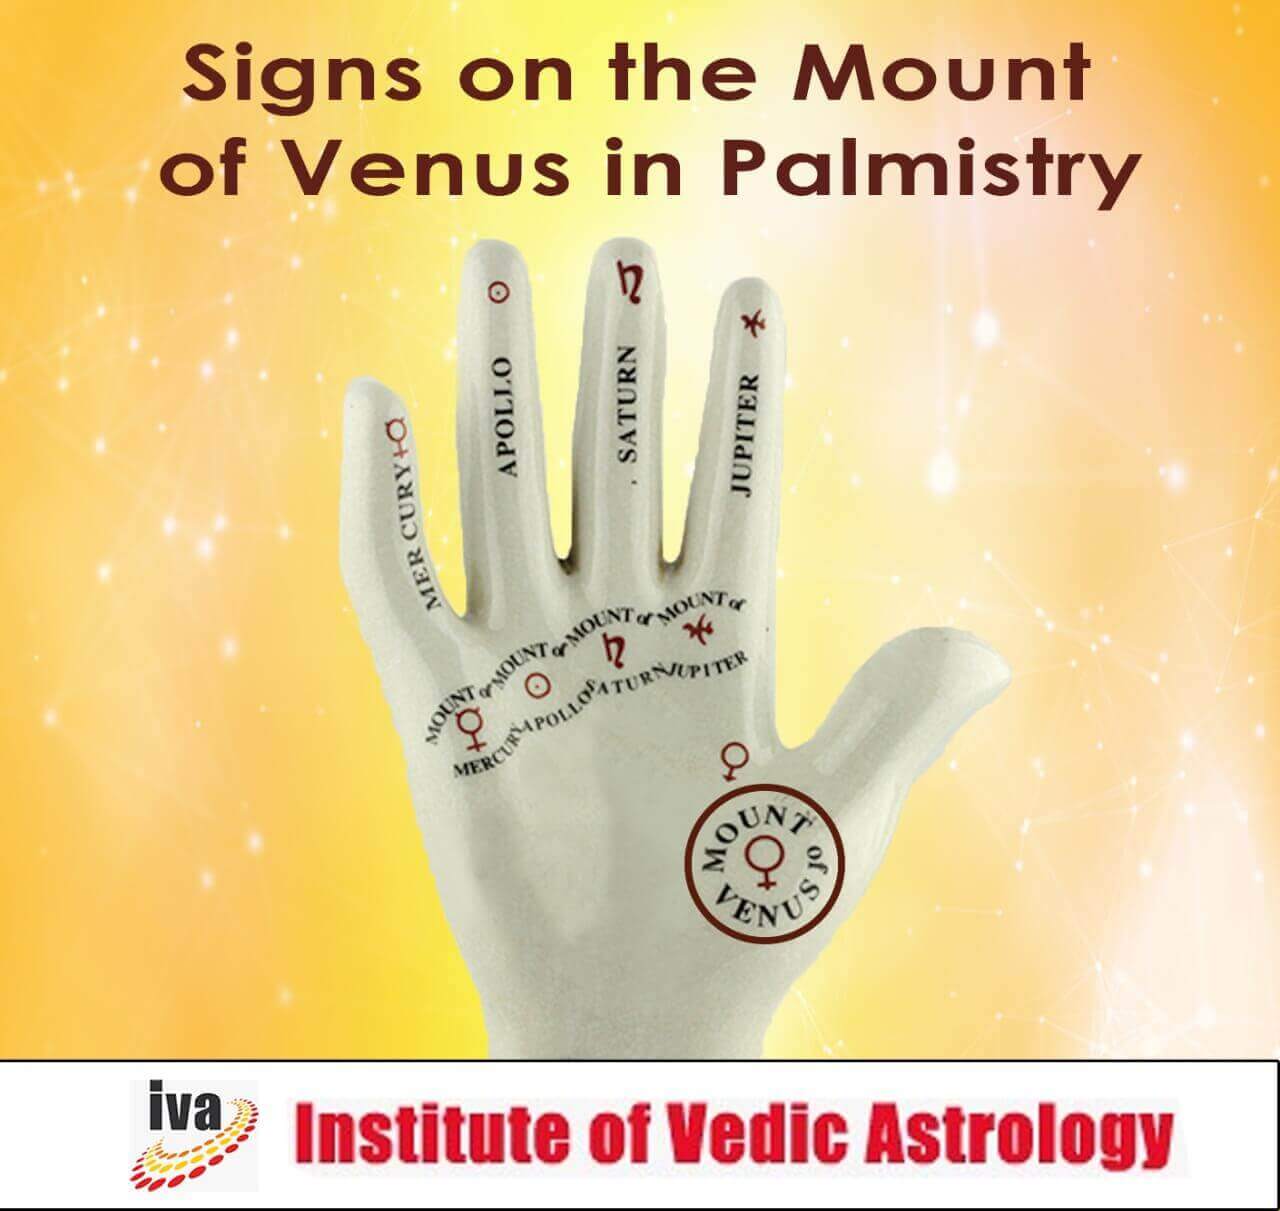 Signs on mount of Venus palmistry